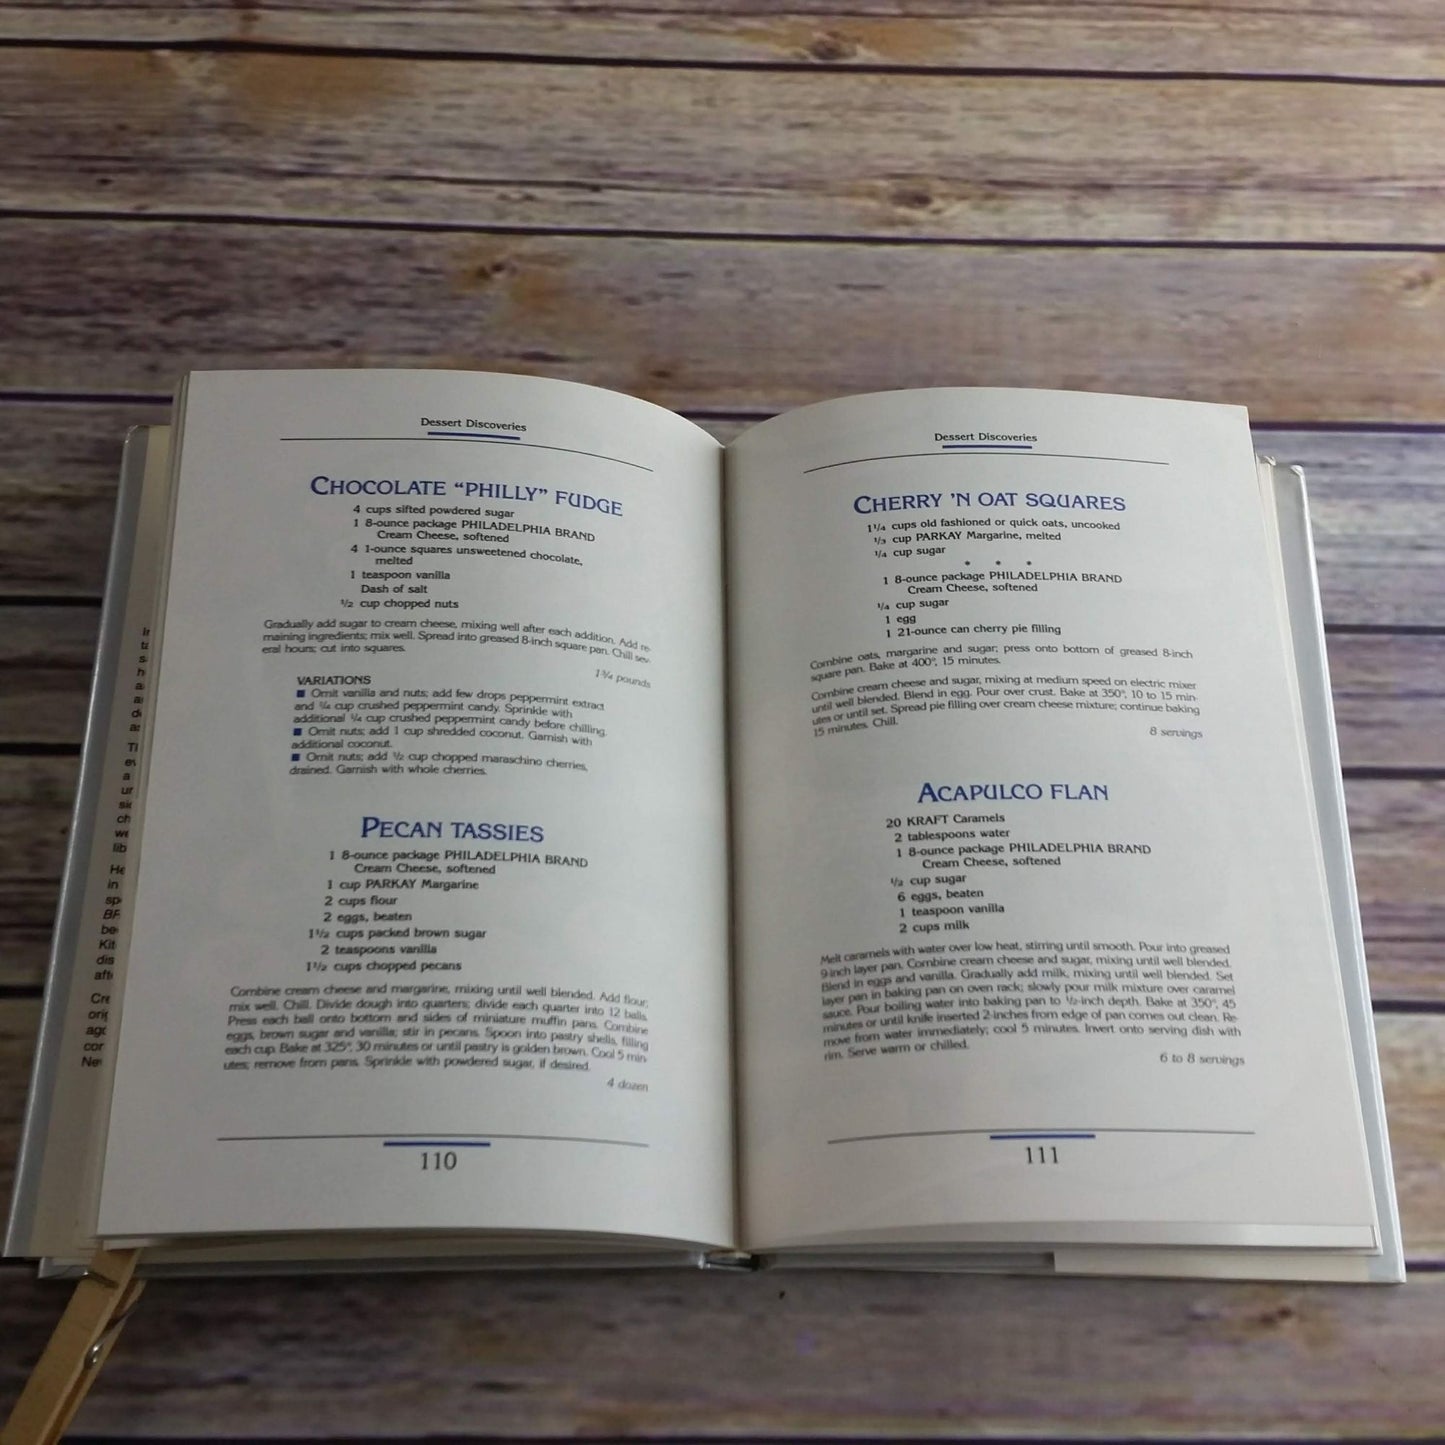 Vintage Philadelphia Cream Cheese Cookbook Promo Recipes 1988 Kraft Hardcover WITH Dust Jacket